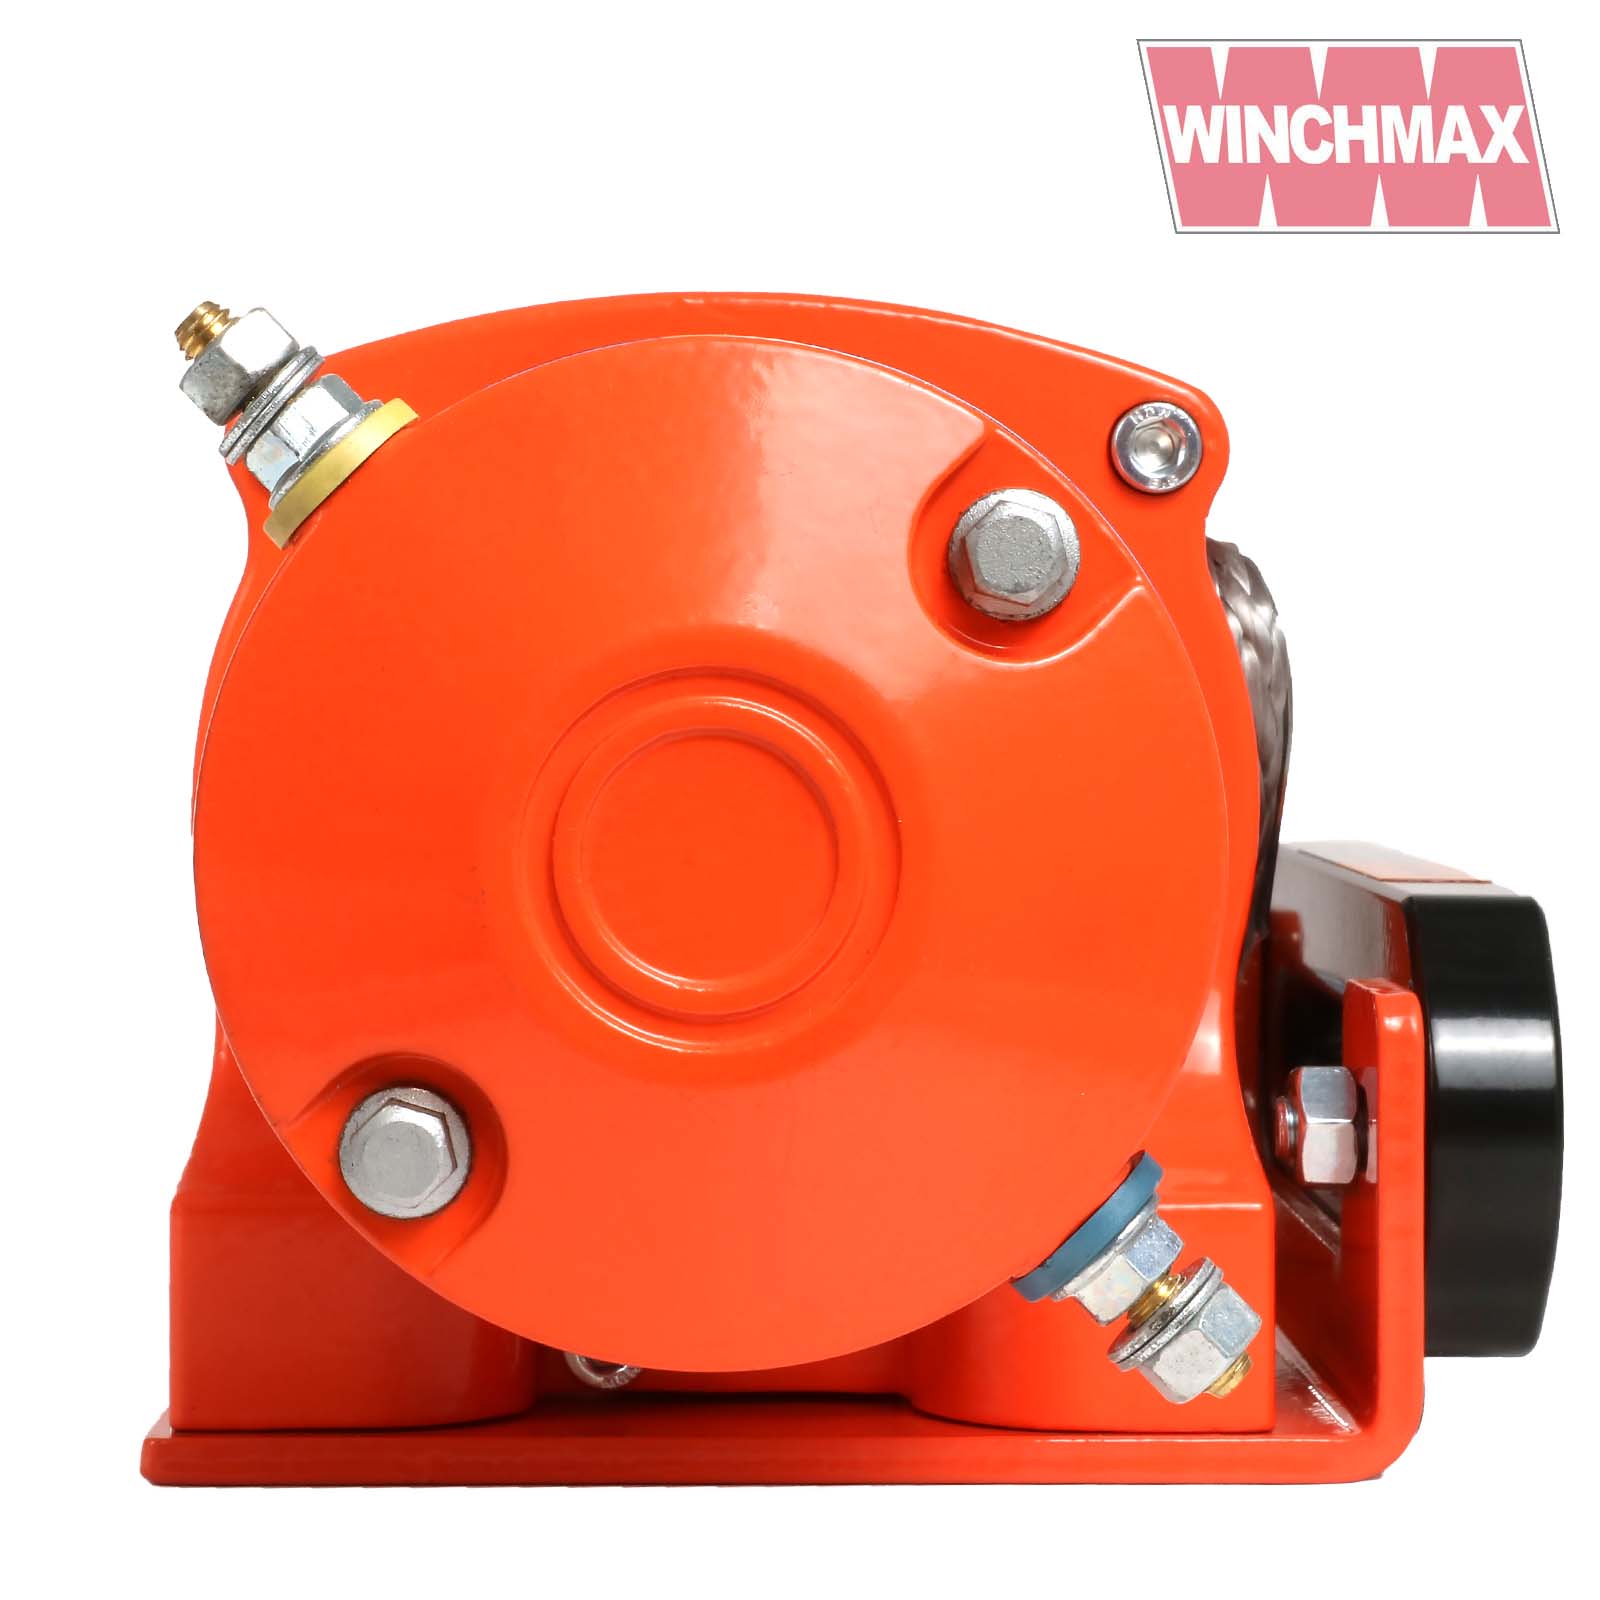 Winchmax 5000lb 12v Winch